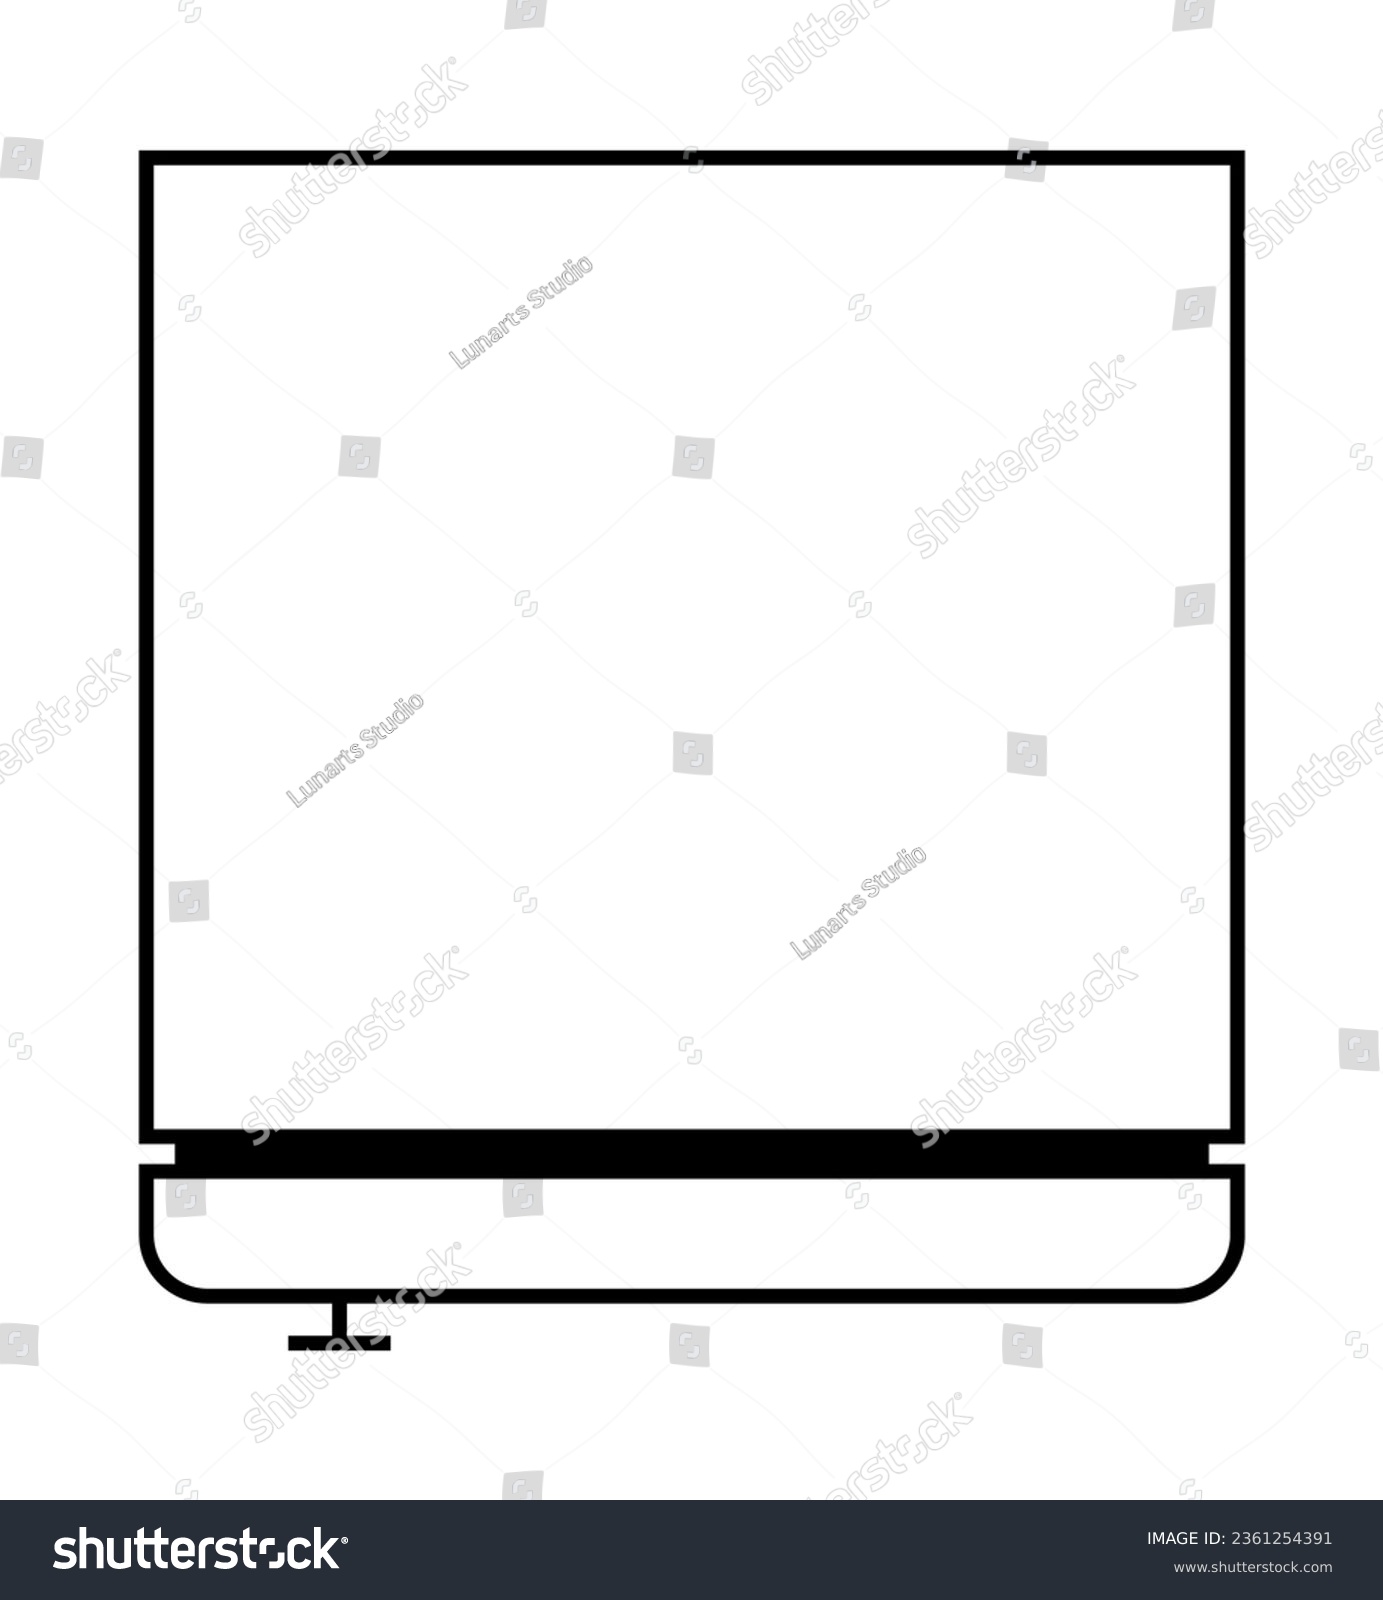 SVG of Refrigerator Top view vector illustration design. svg